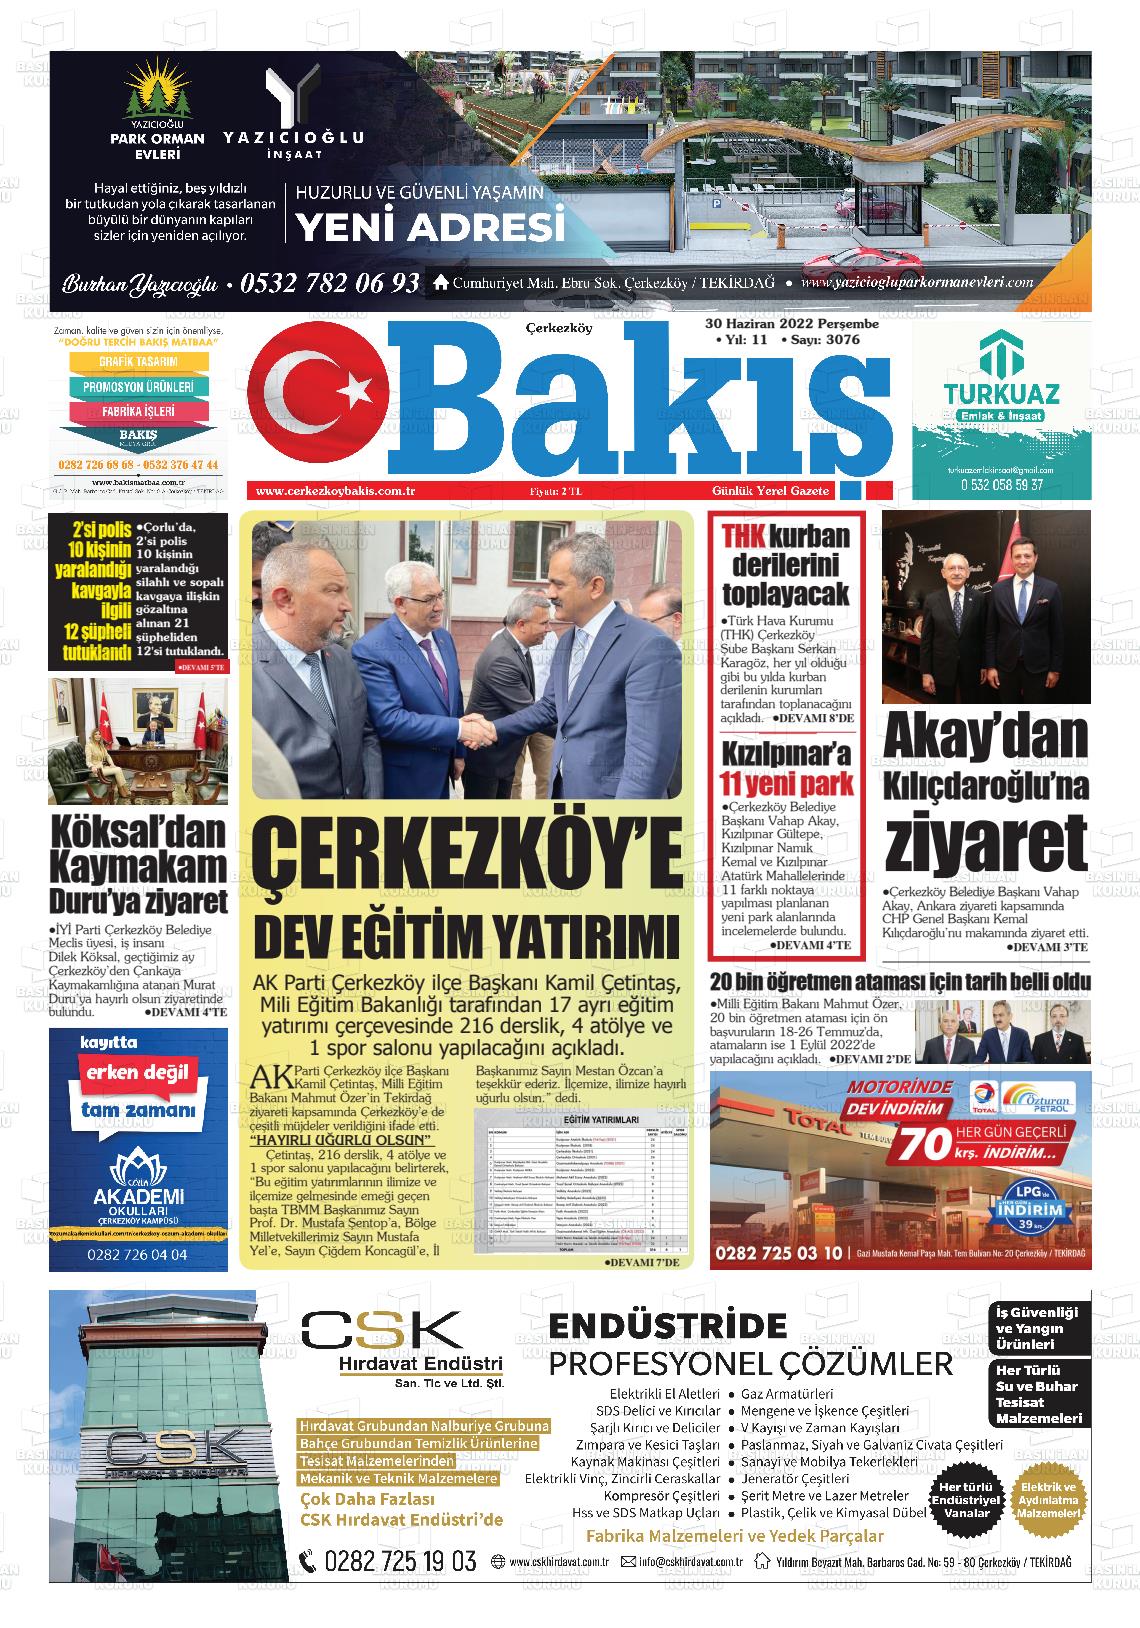 01 Temmuz 2022 Çerkezköy Bakış Gazete Manşeti